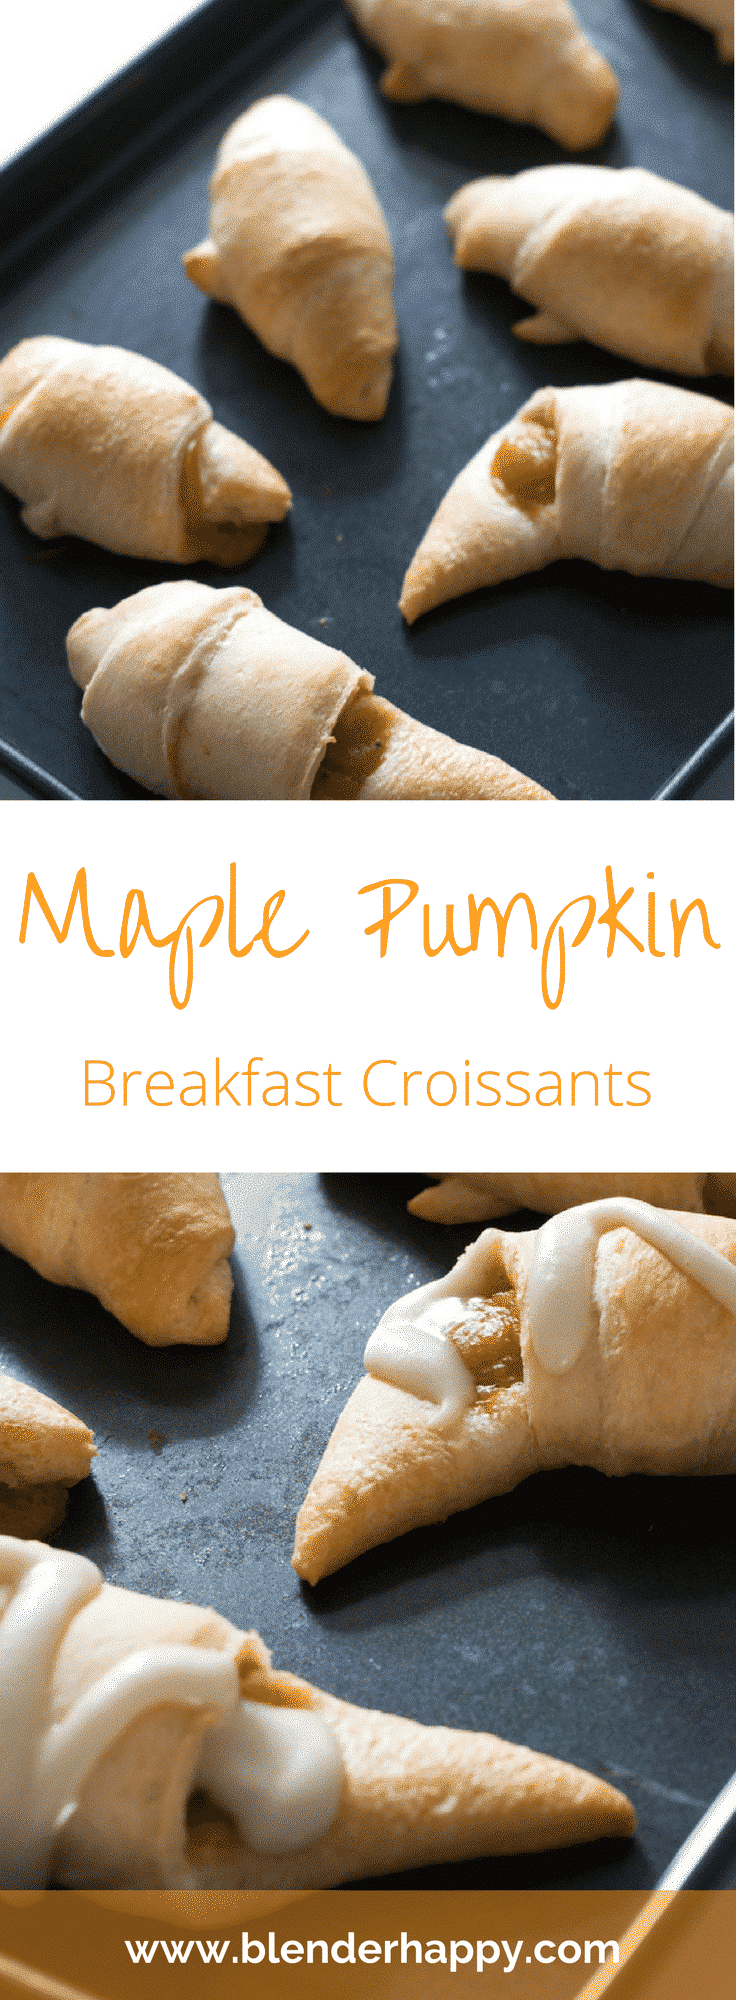 Maple pumpkin breakfast croissants on the table in minutes » Blender Happy